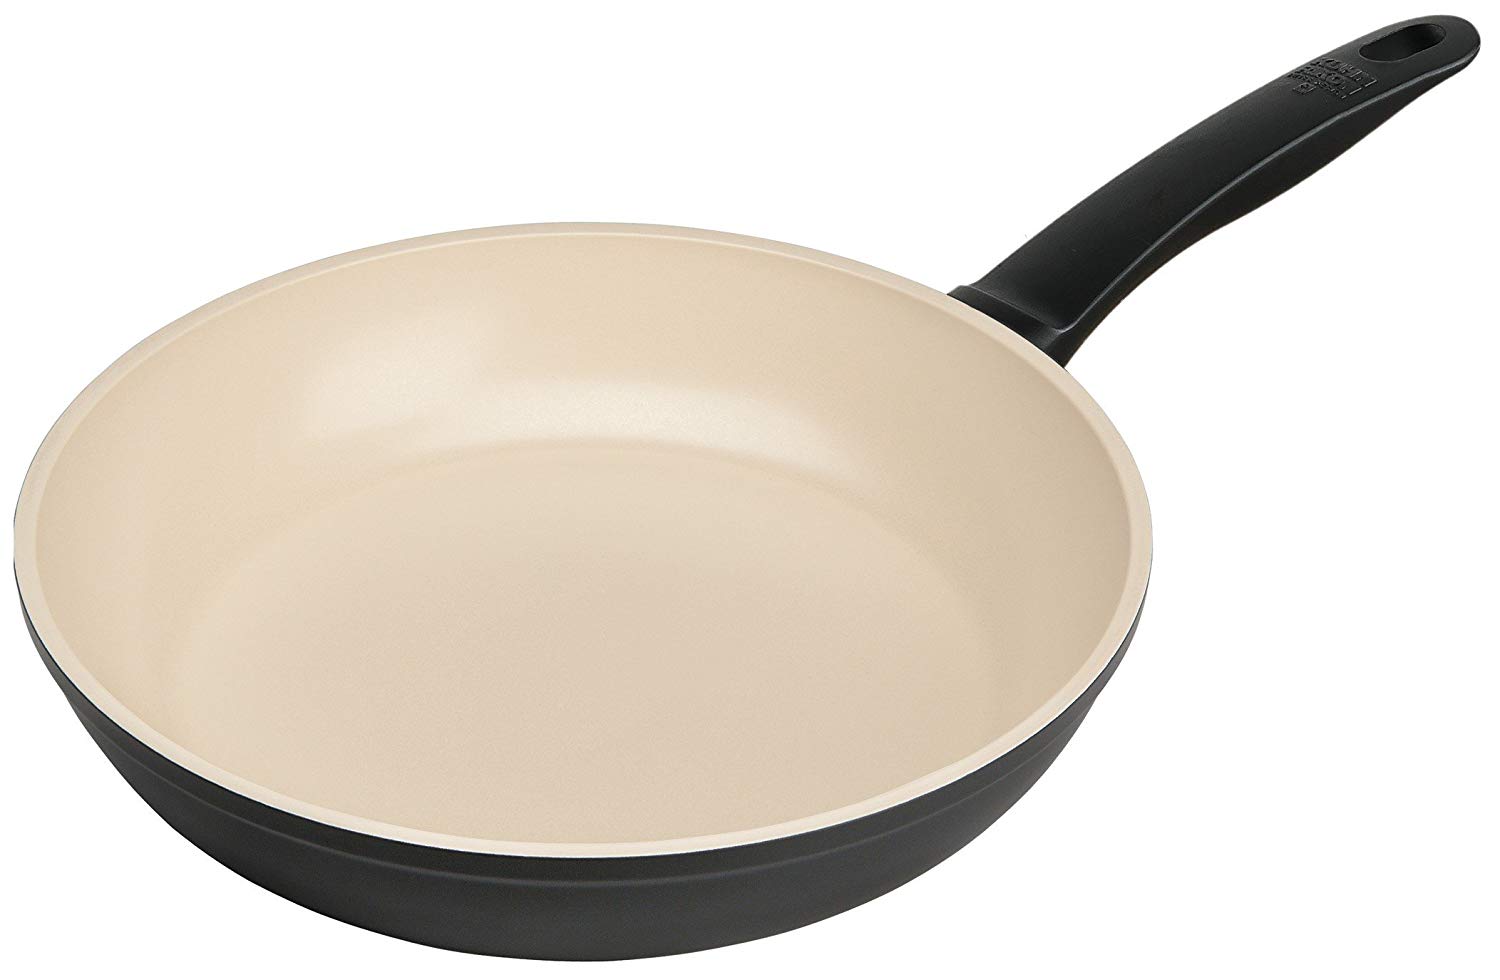 Kuhn Rikon 28 Cm Easy Ceramic Induction Frying Pan, Black